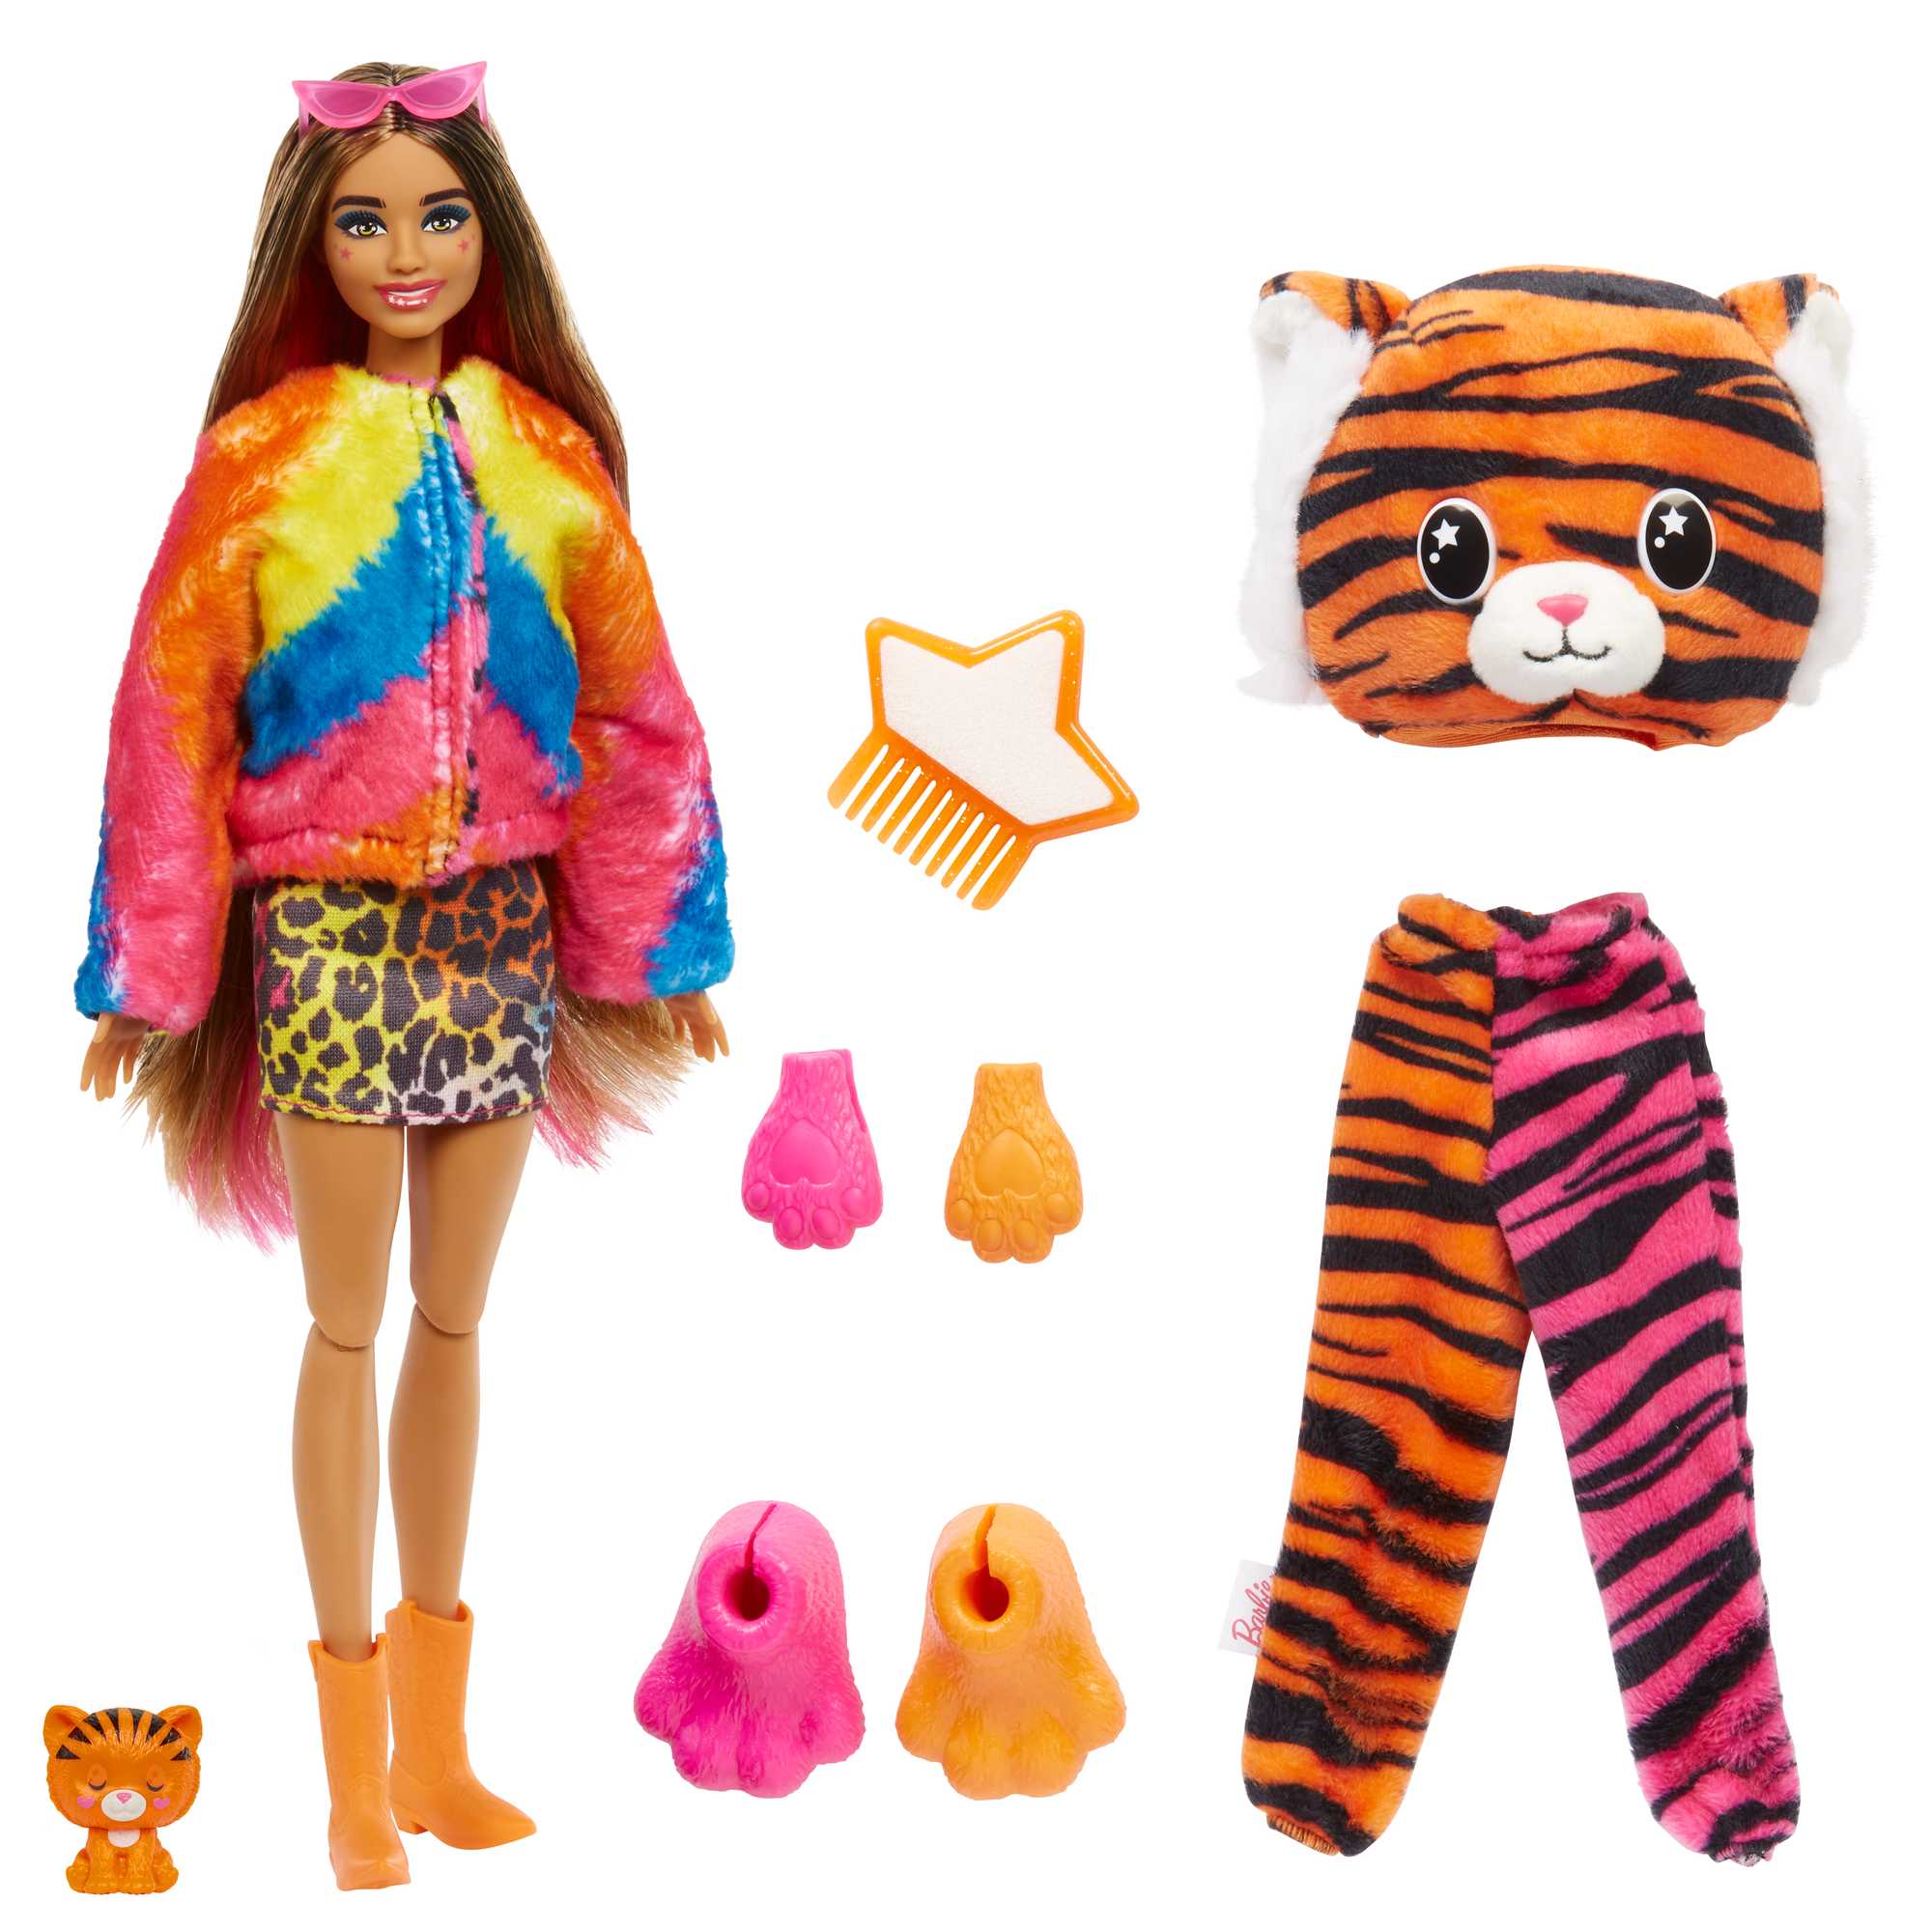 Barbie Cutie Reveal Jungle Series Chelsea Tiger Doll, Dolls